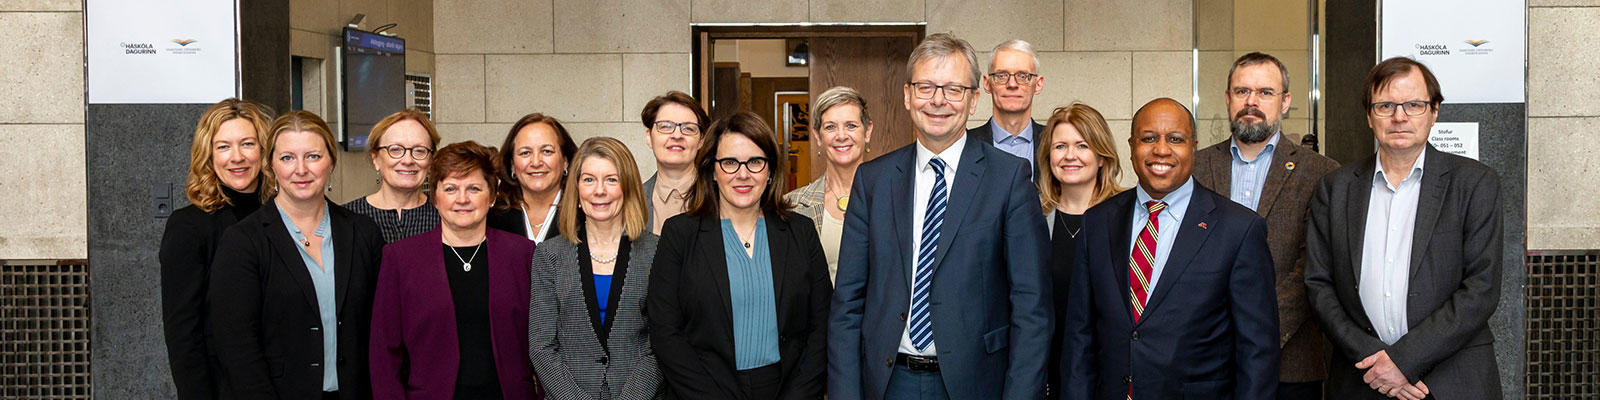 UMN delegation members and University of Iceland hosts